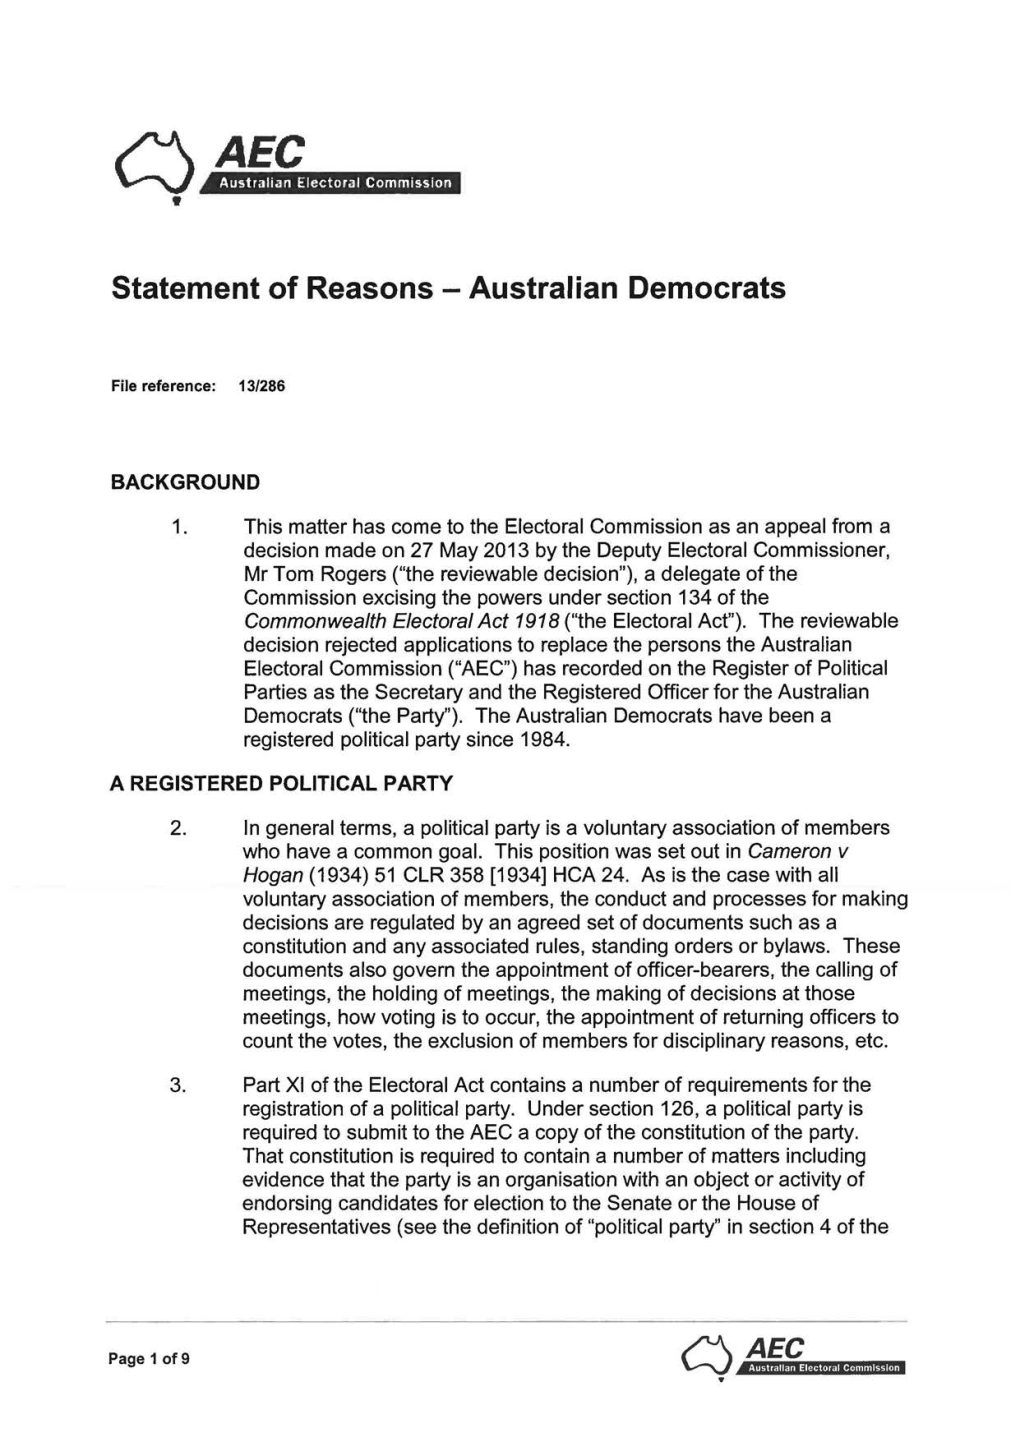 Statement of Reasons - Australian Democrats